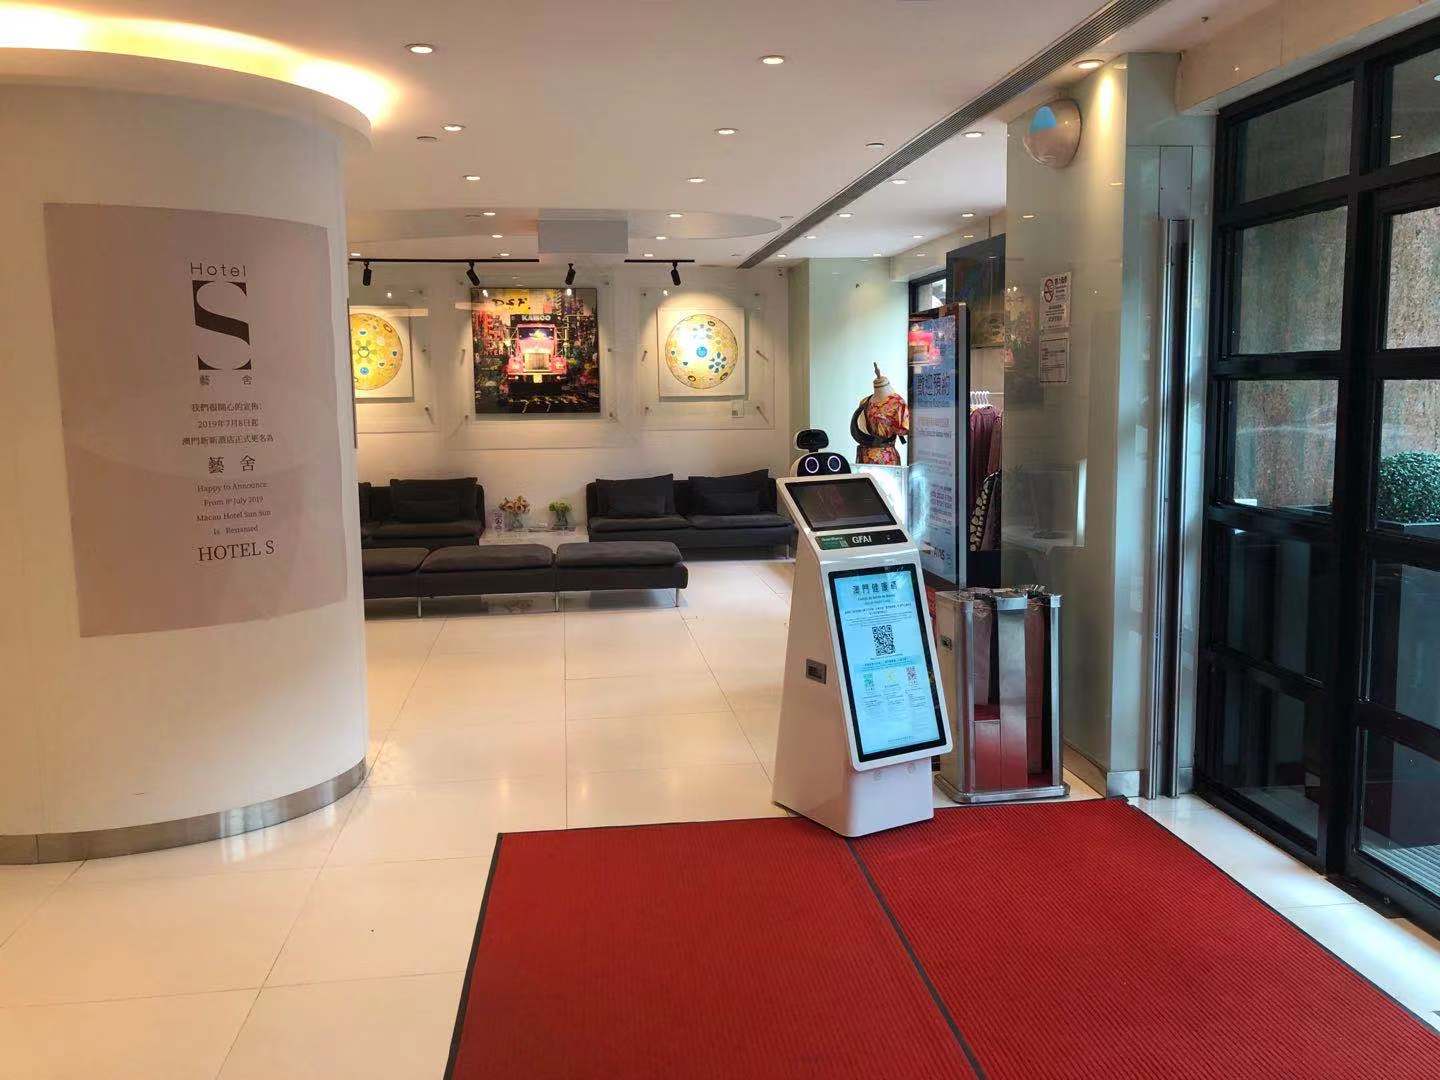 Macau Hotel S Deploys The Guardforce’s Concierge Robot To Strengthen Epidemic Prevention Measures